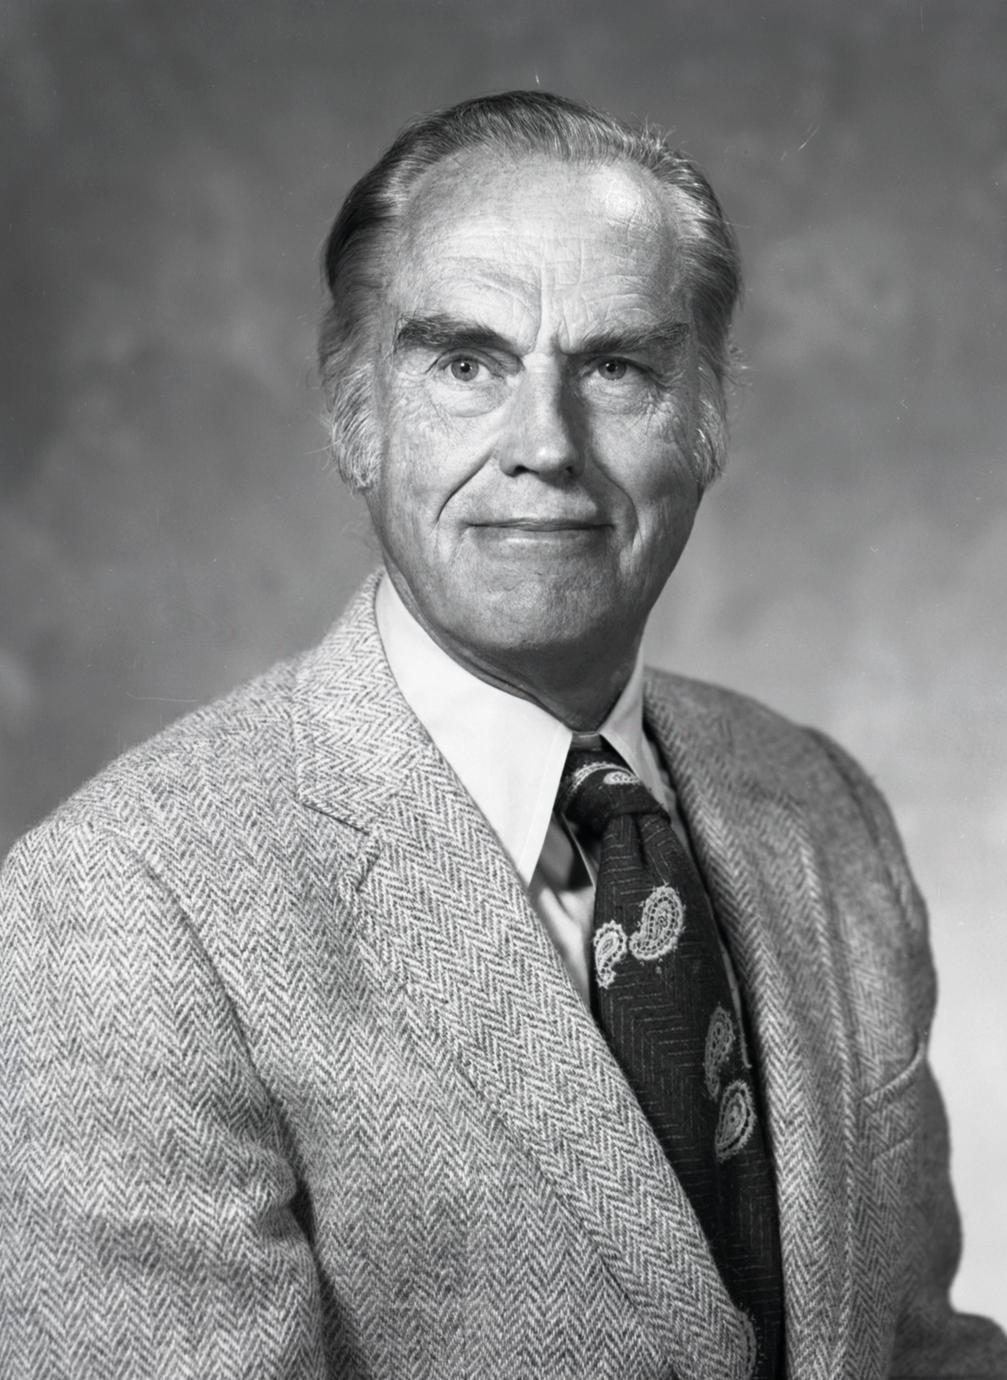 Robert Hanson, veterinary science